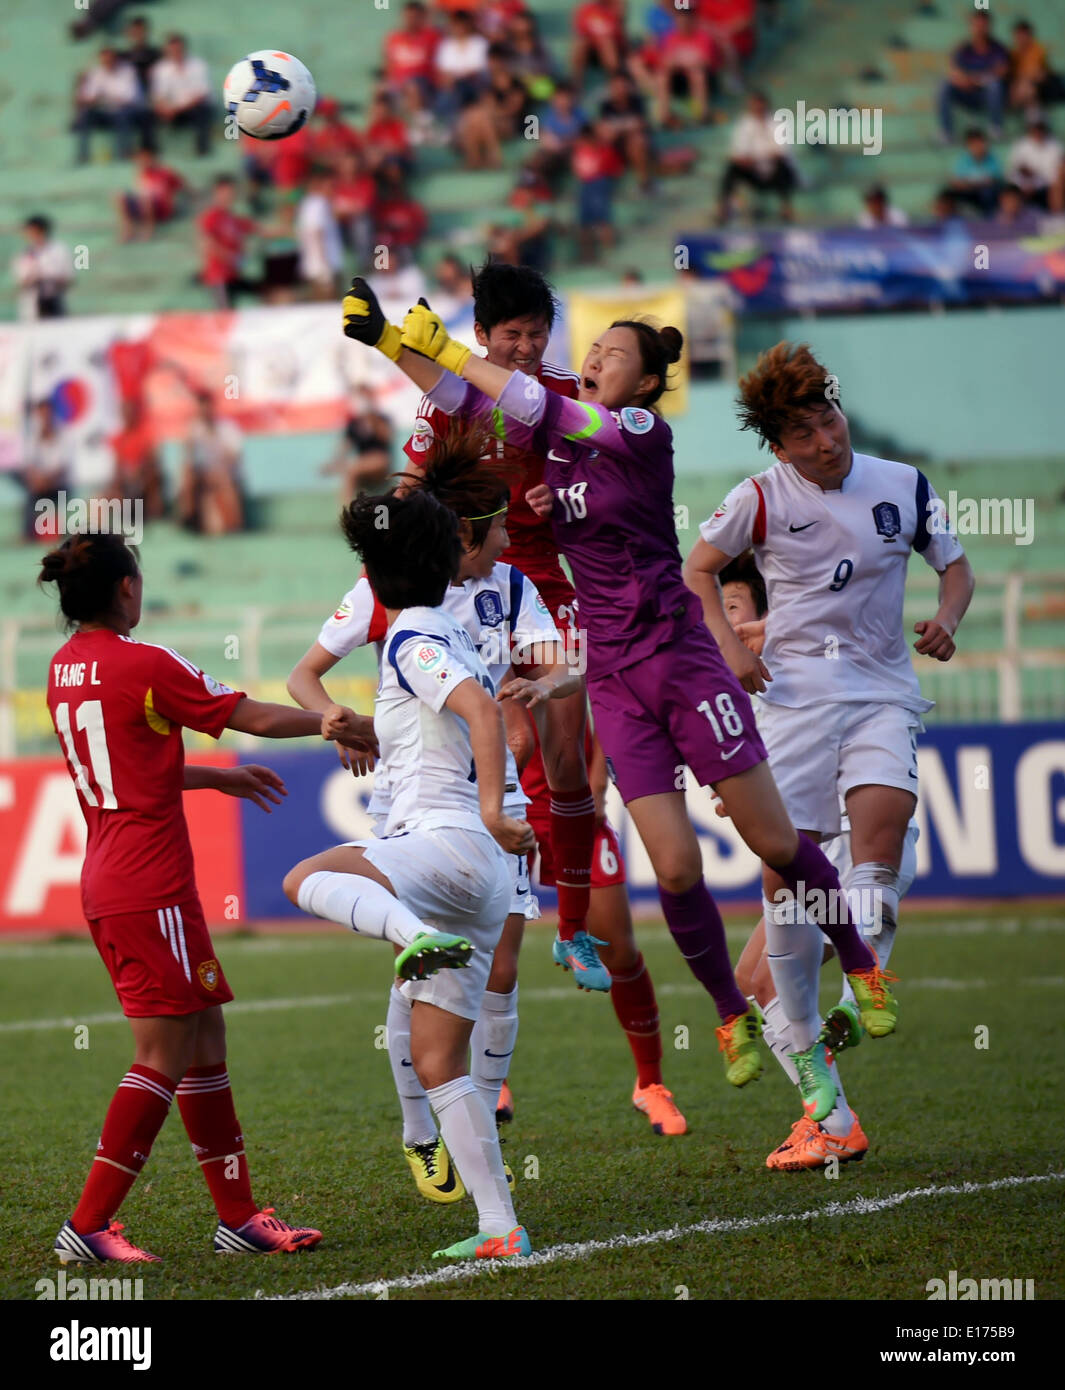 (140525) -- HO CHI MINH CITY, May 25, 2014 (Xinhua) -- Goalkeeper Wang Shanshan (R2) of China saves the ball during the third-place match against South Korea at the 2014 Asian Football Confederation (AFC) Women's Asian Cup at Thong Nhat Stadium in Ho Chi Minh City, Vietnam, May 25, 2014. China defeat South Korea 2-1 to win the third place of the event. (Xinhua/Cheong Kam Ka) Stock Photo